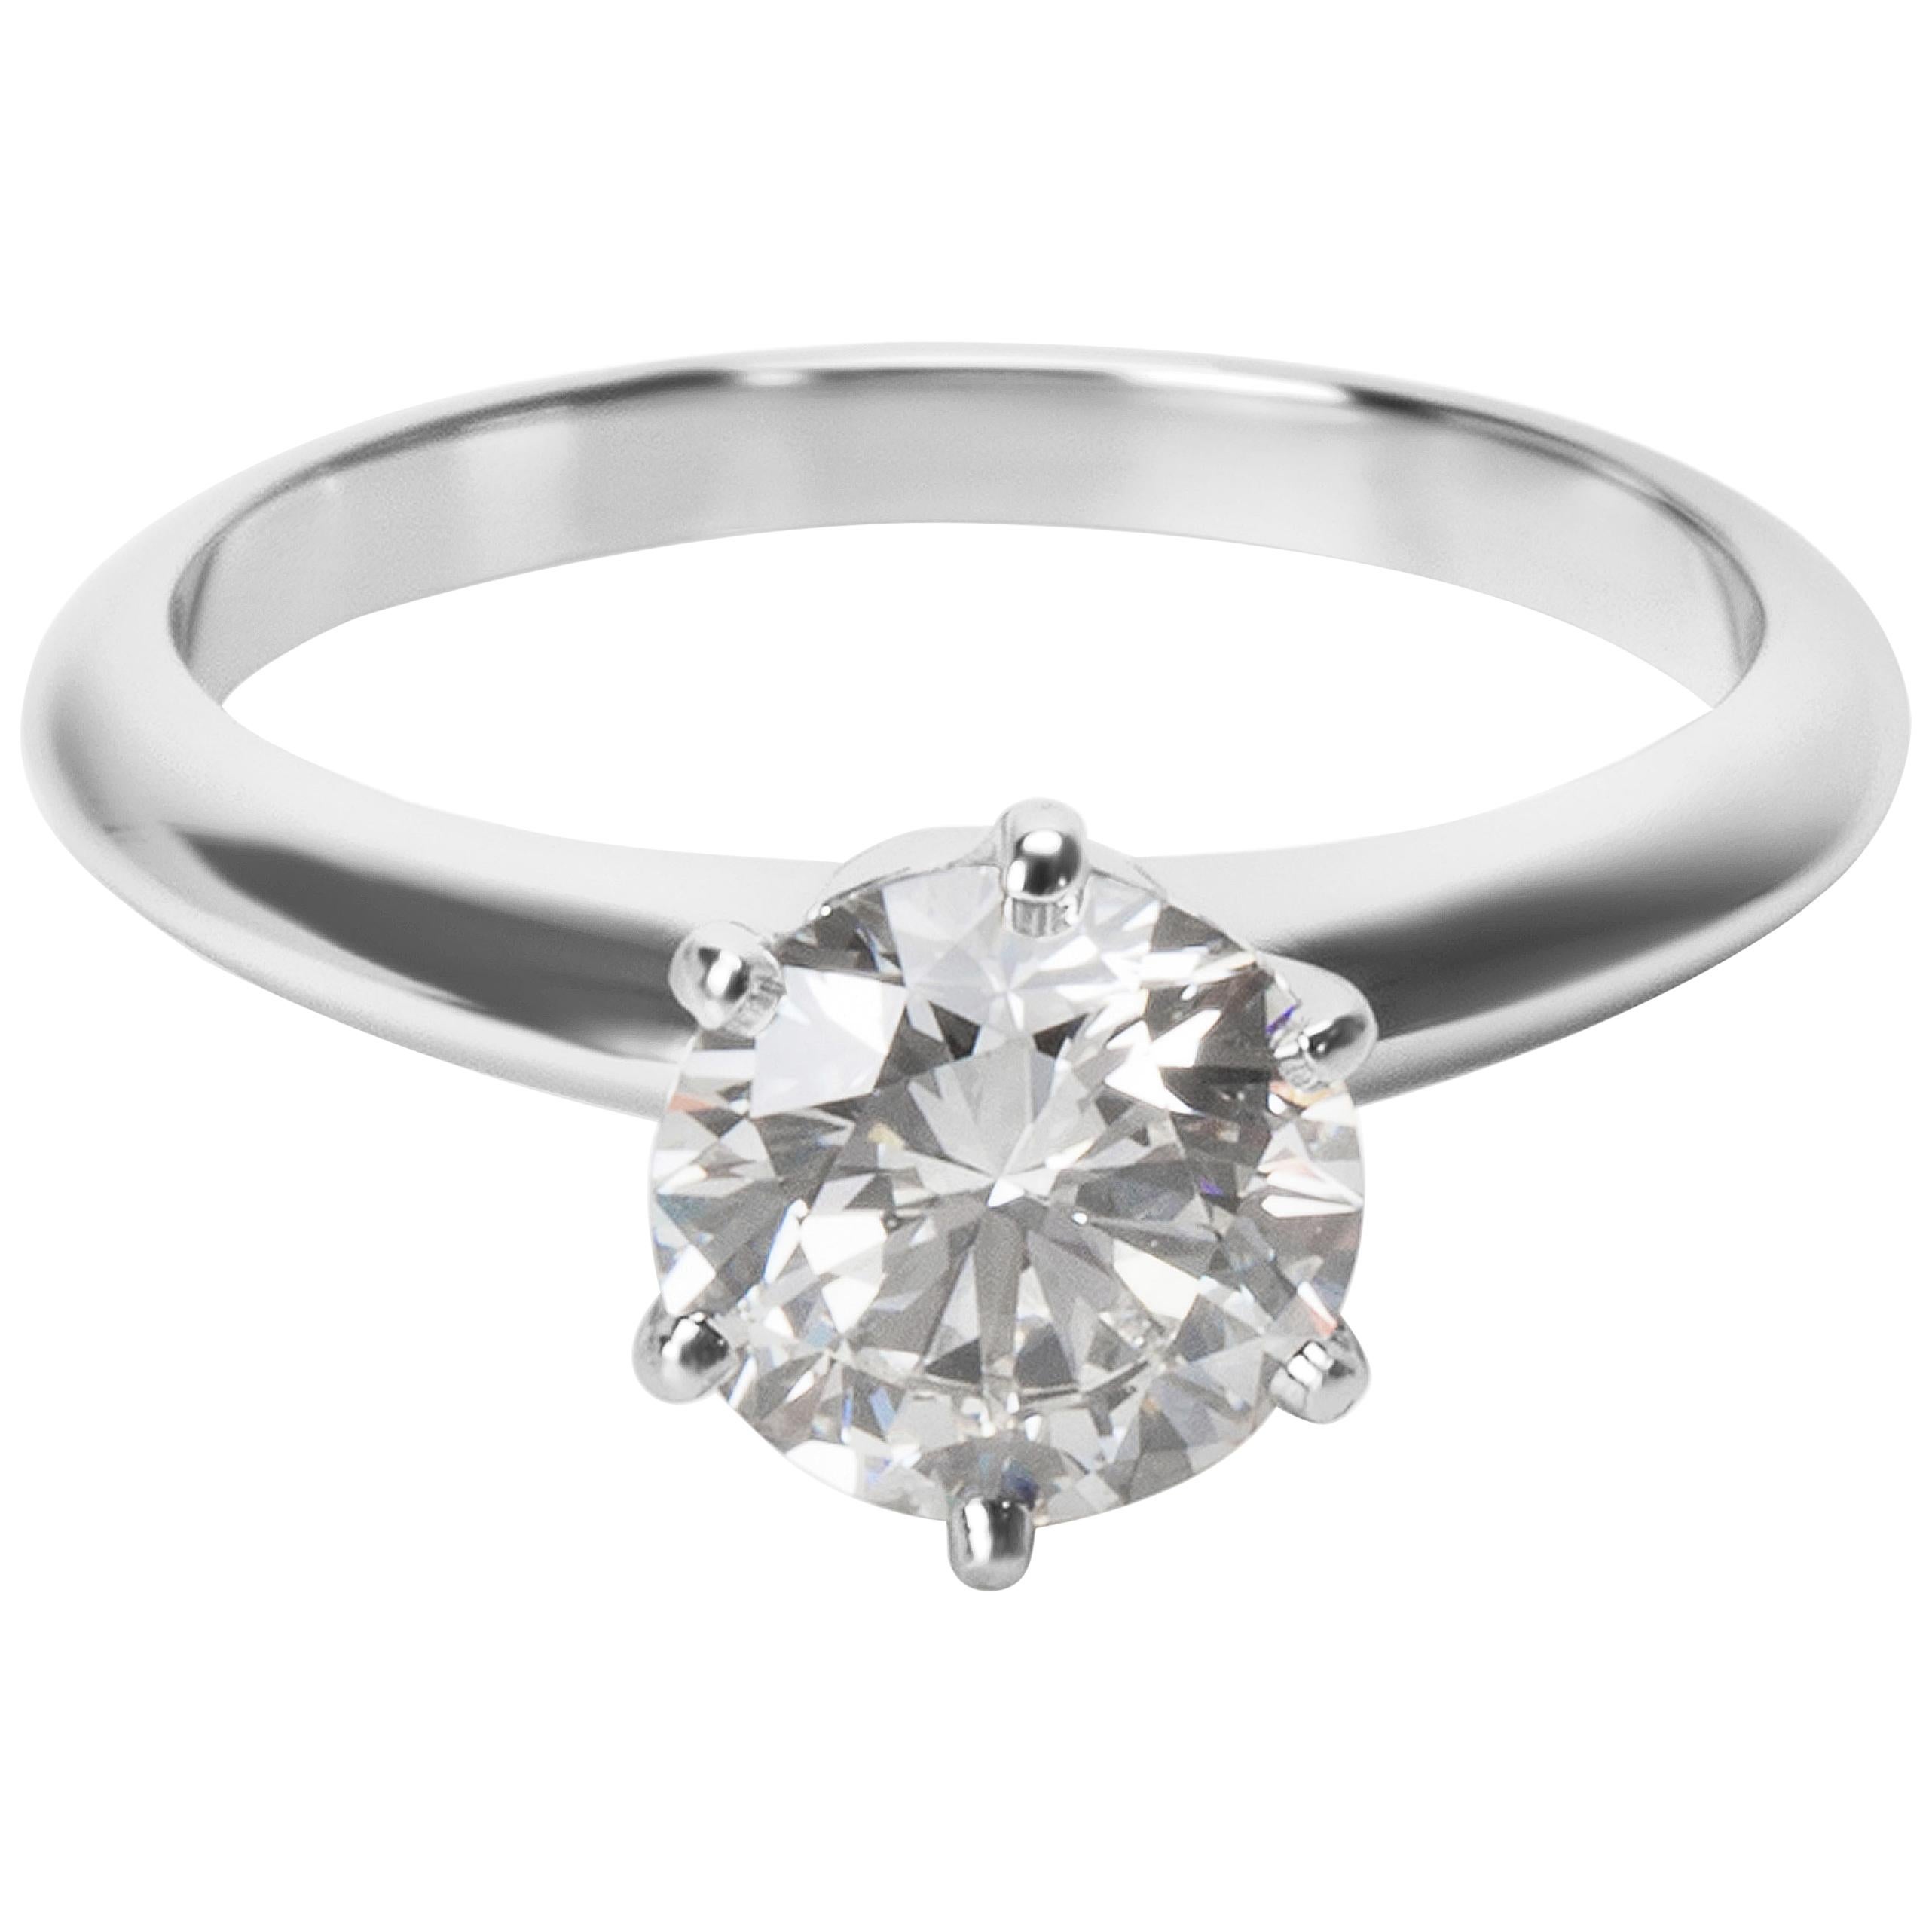 Tiffany & Co. Diamond Engagement Ring in Platinum 1.25 Carat G VVS2